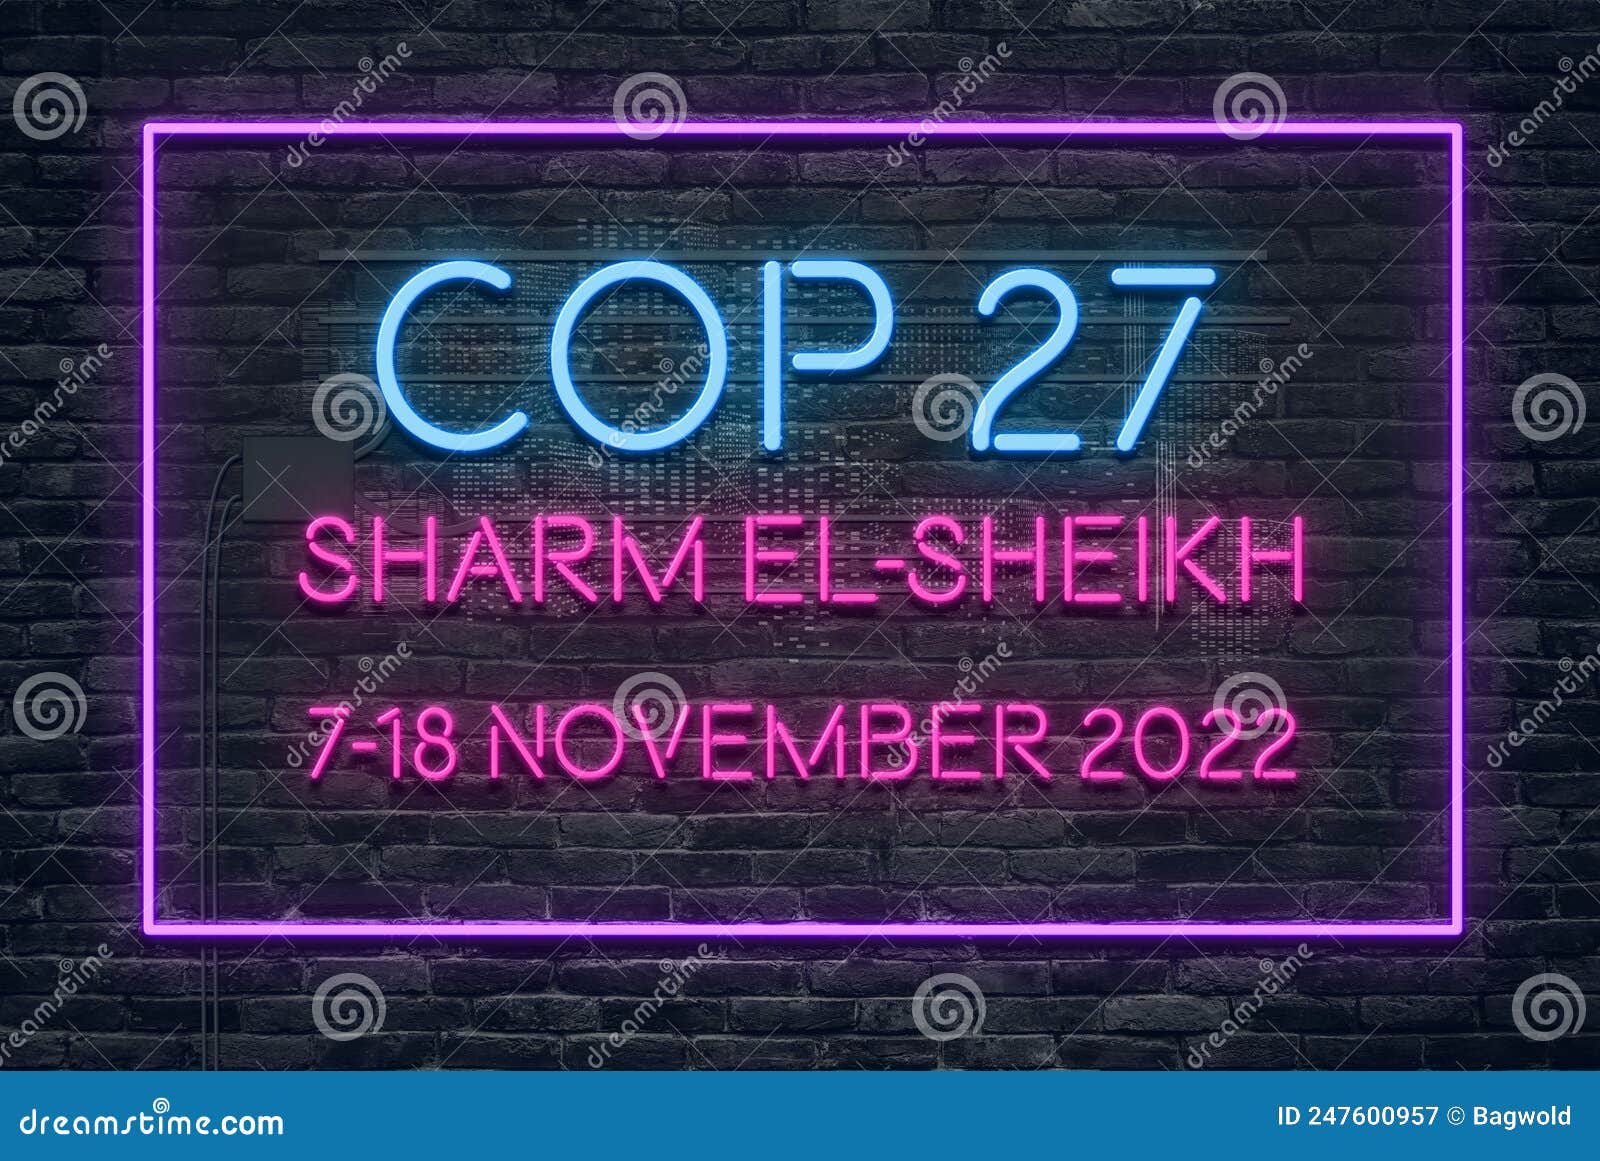 neon sign - cop 27 - sharm el-sheikh, egypt, 7-18 november 2022 - international climate summit  